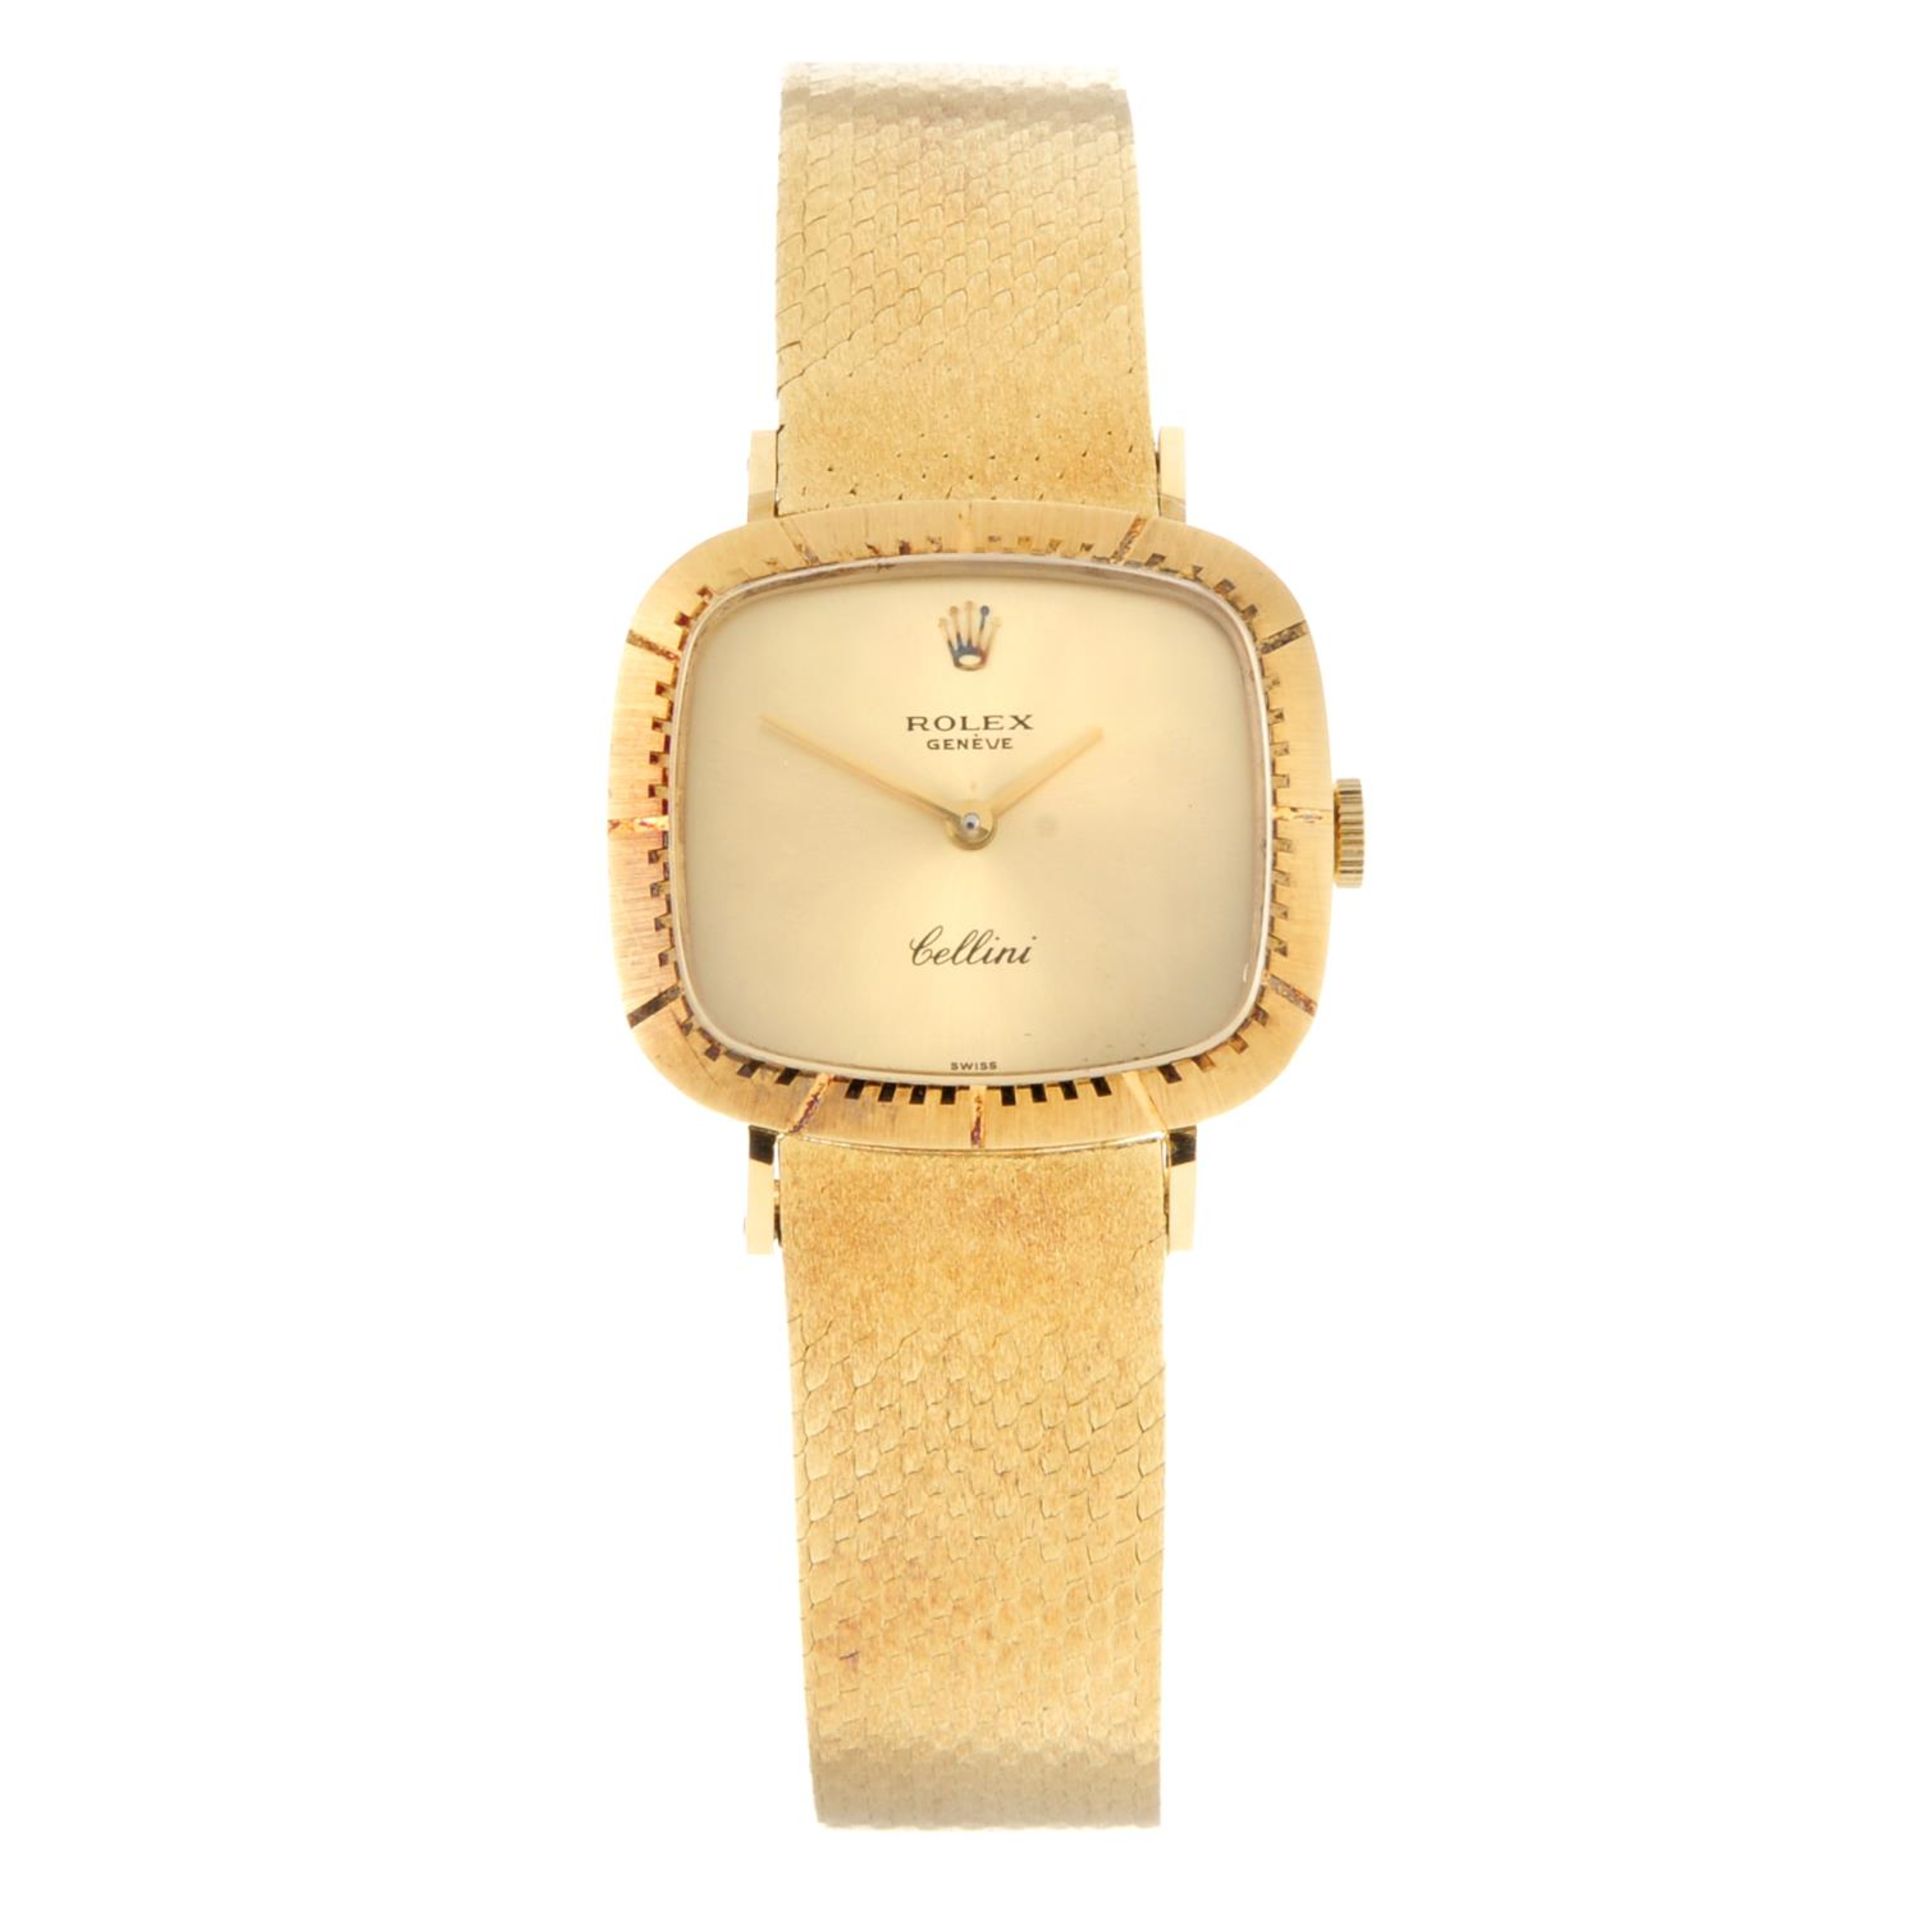 ROLEX - a lady's Cellini bracelet watch.